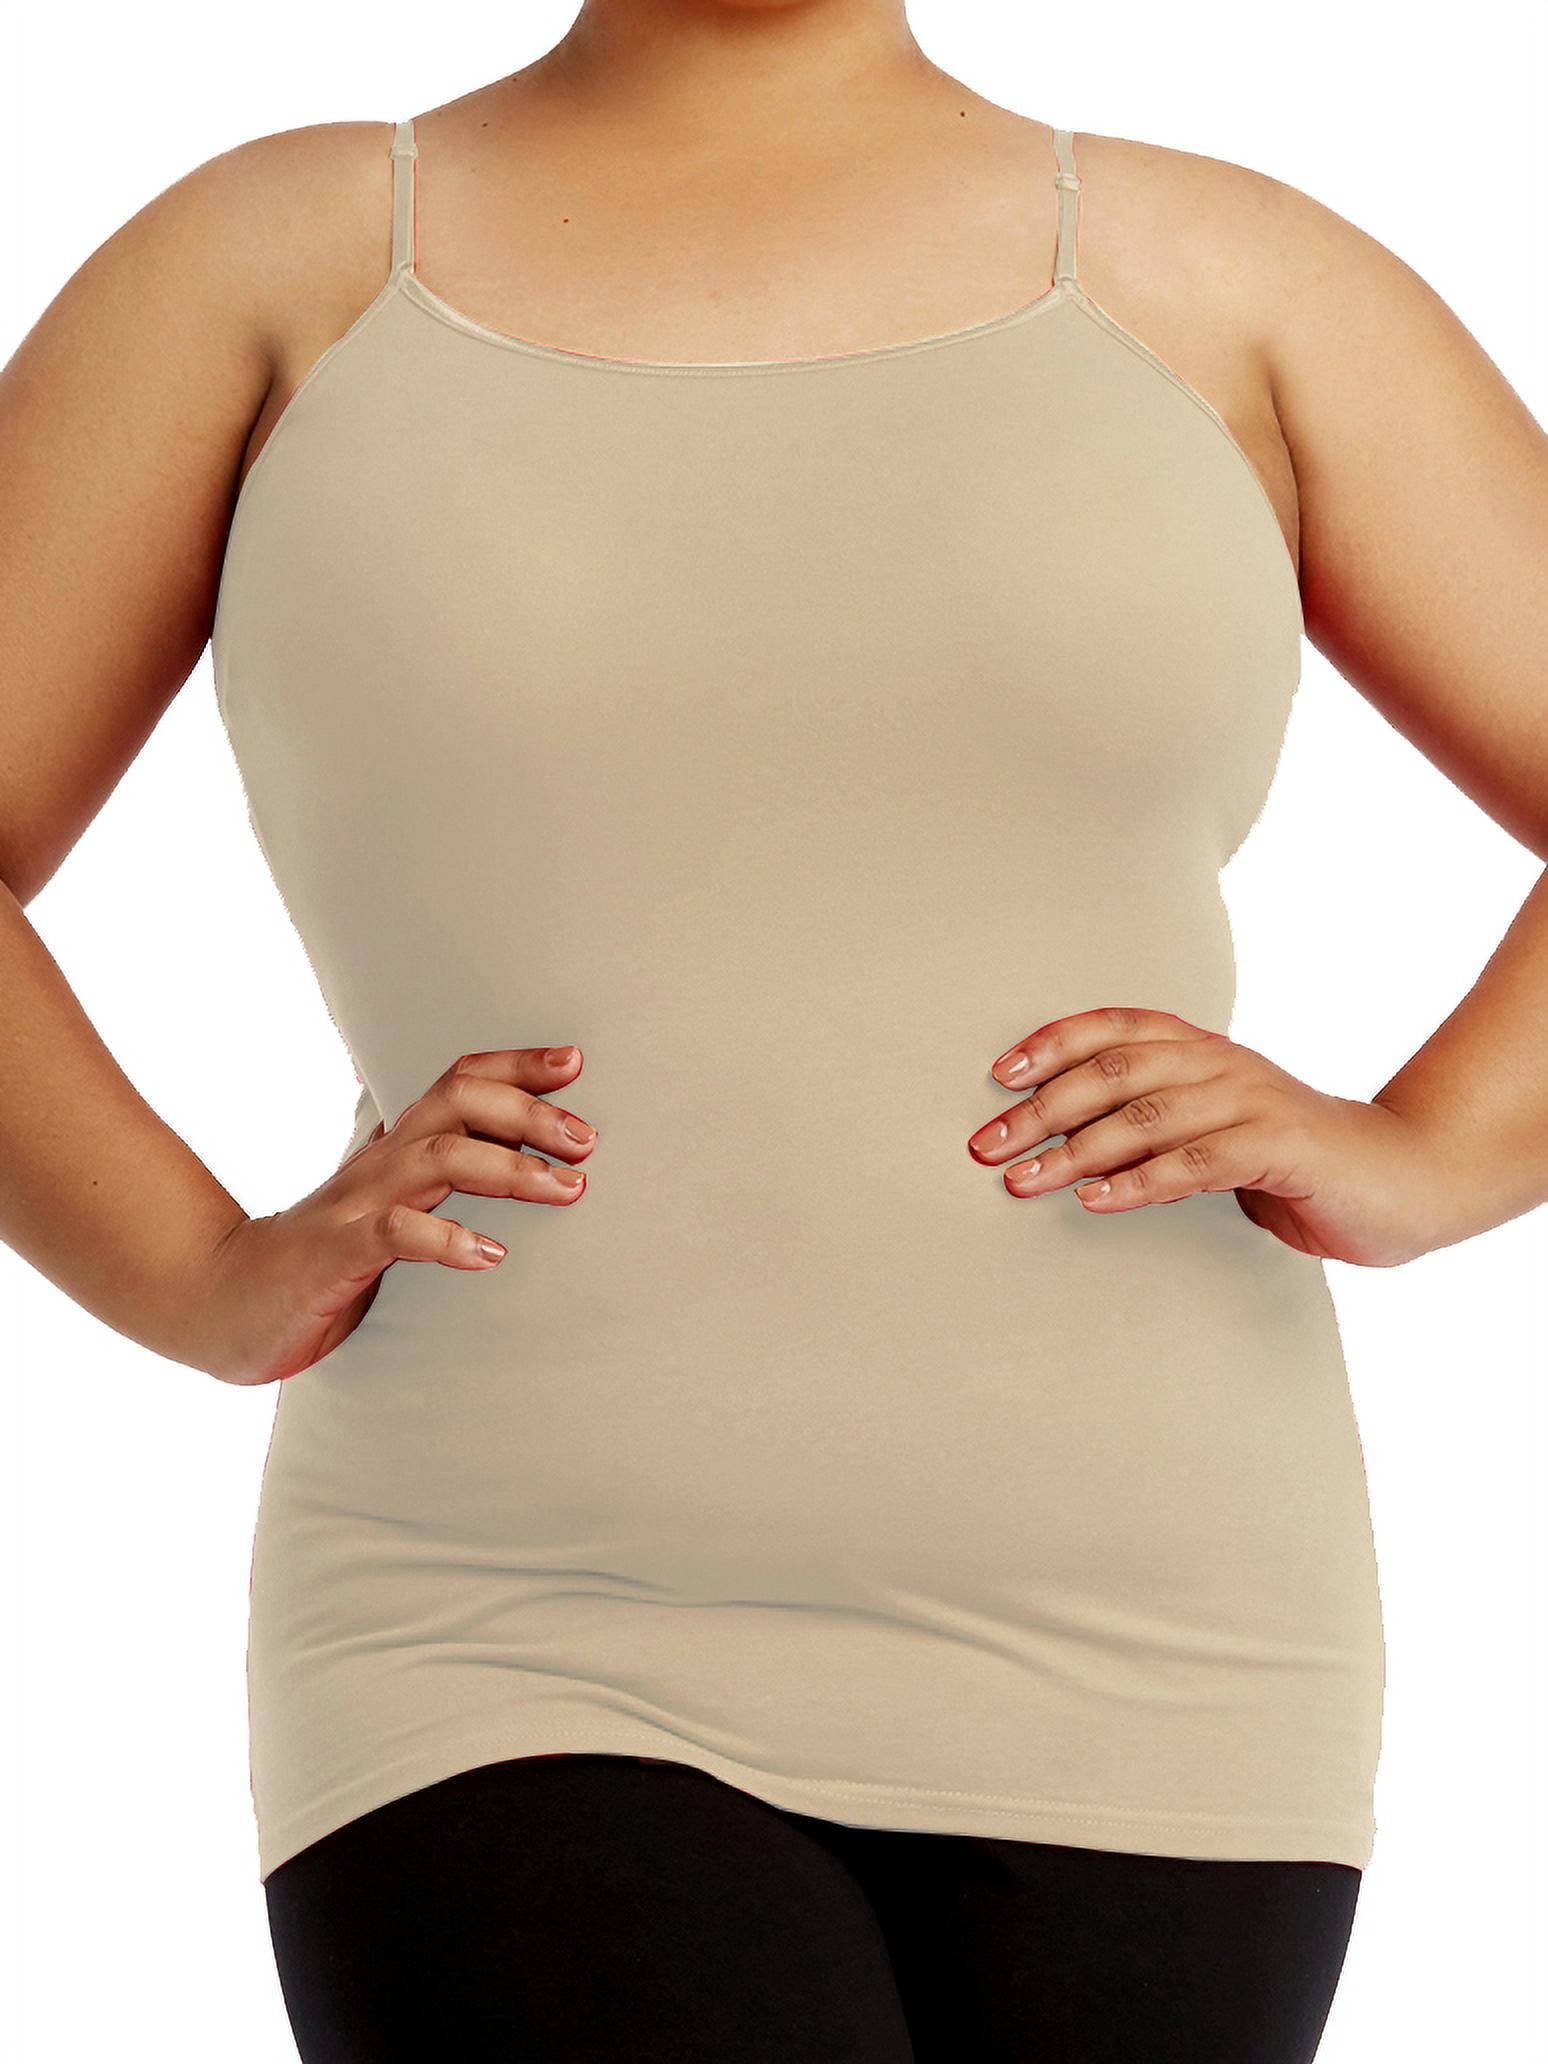 Women's Cotton Plus Size Camisole Tank Top - Heather Grey - X-Large 